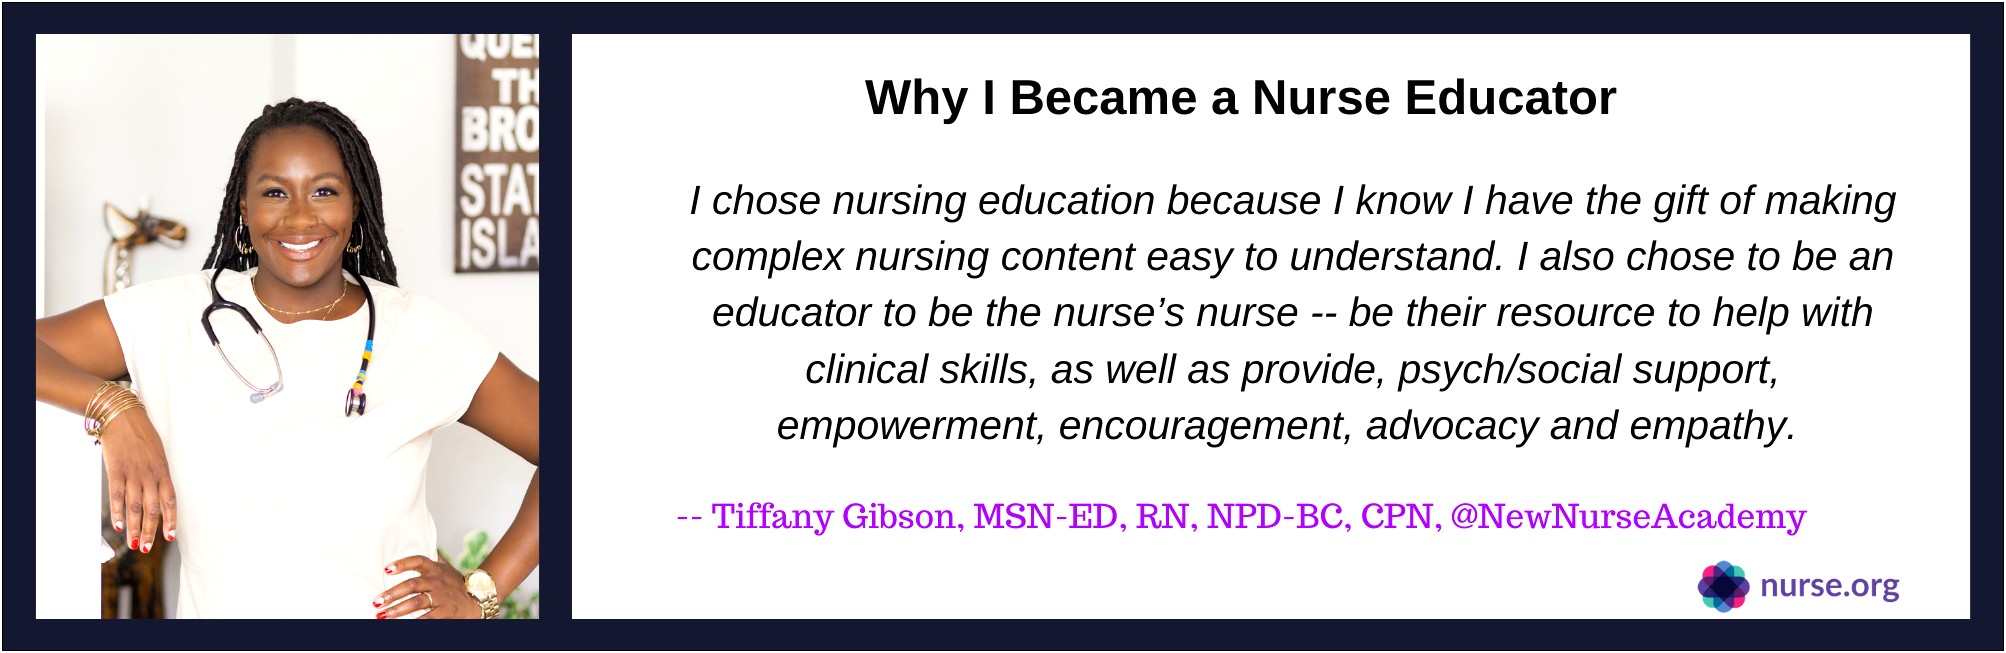 Resume For New Nurse Educator Job